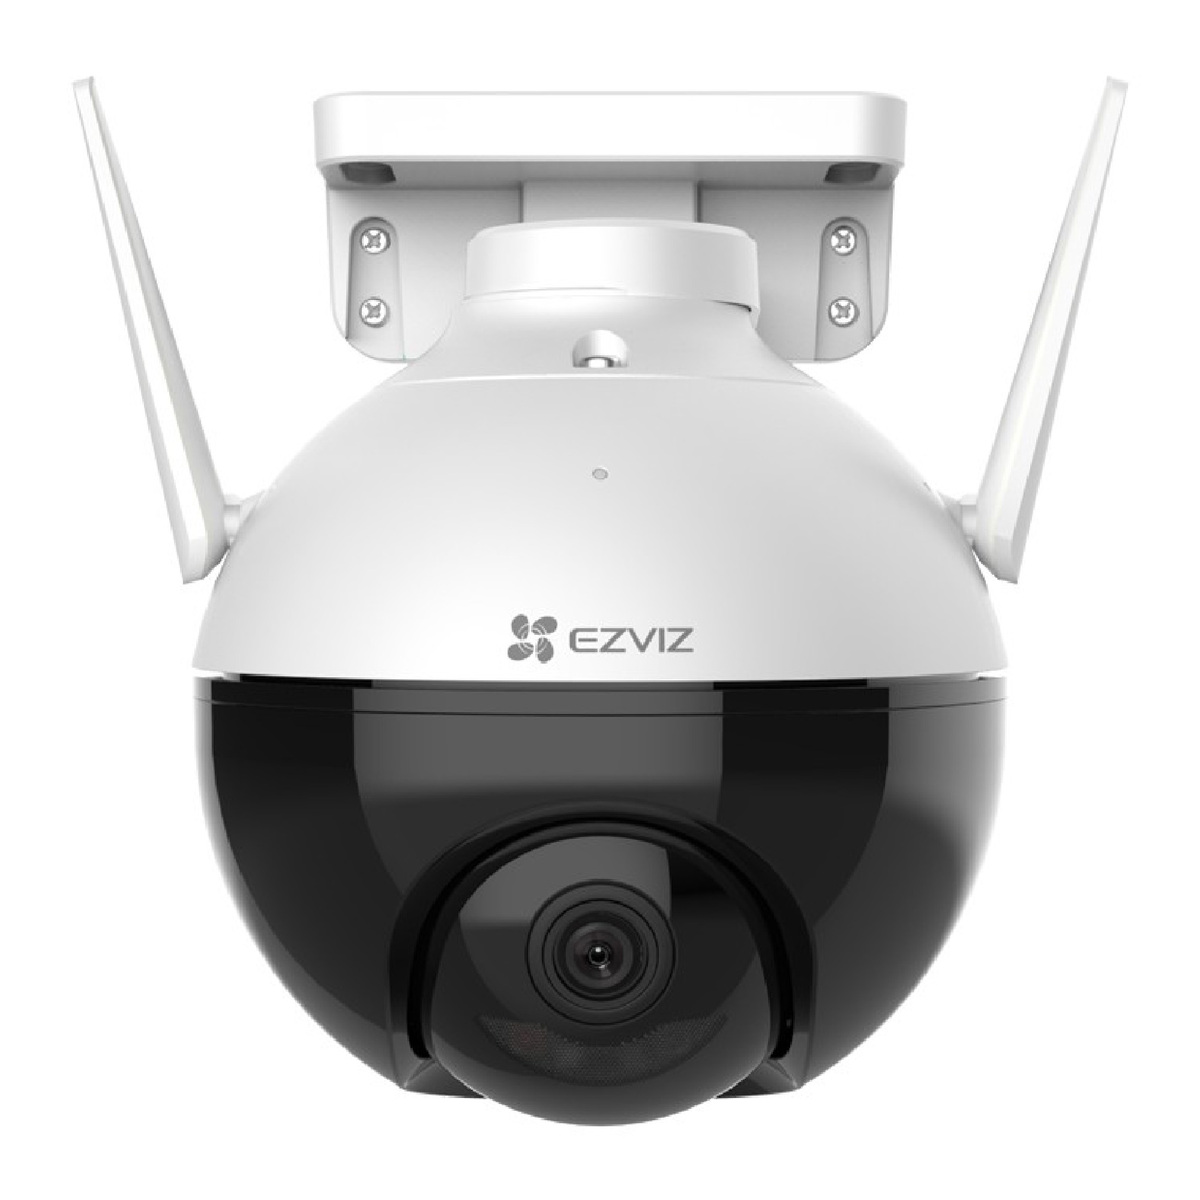 Ezviz Outdoor Pan/Tilt Home Security Camera, 4 MM IP Camera, CS-C8C-A0-1F2WFL1